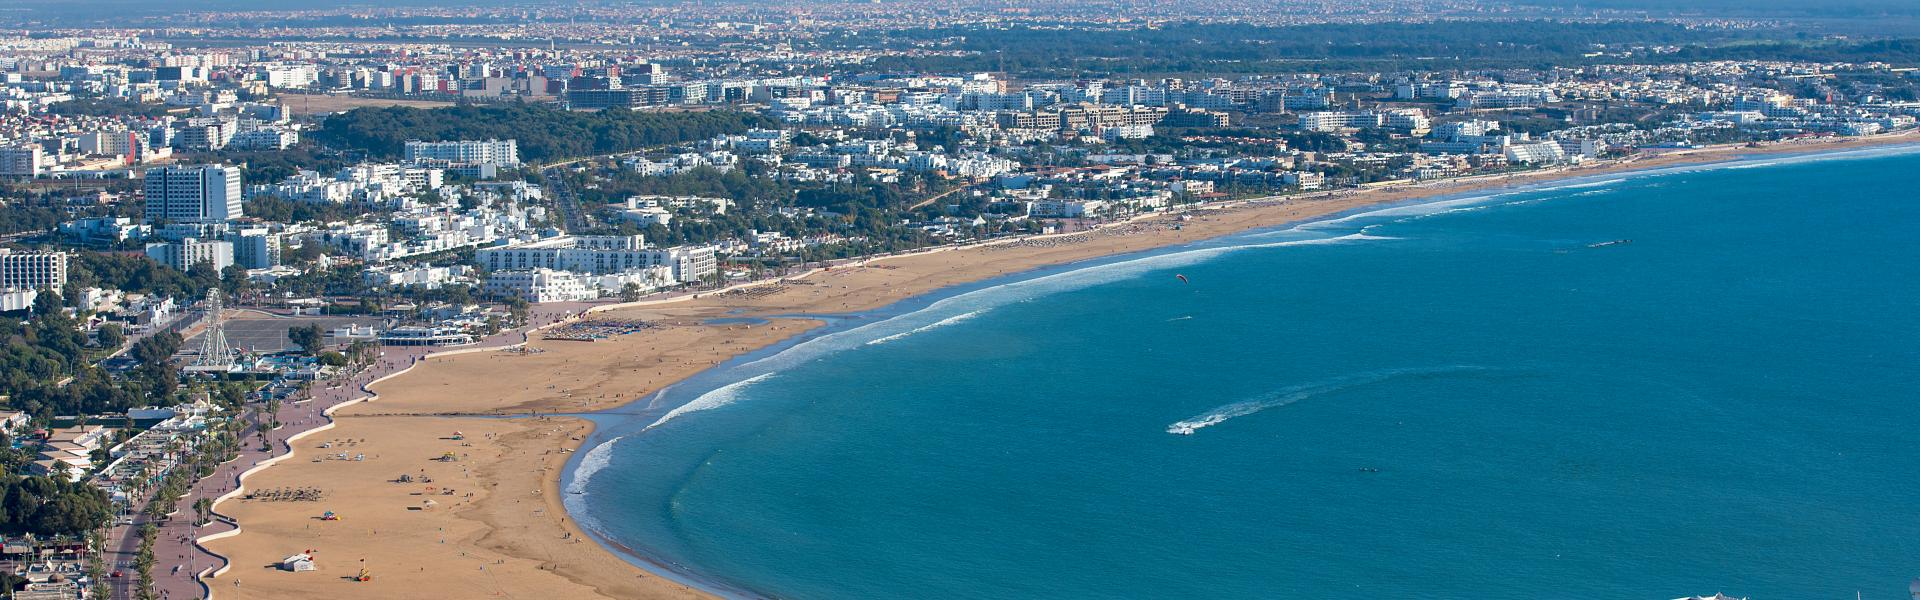 Agadir, de populairste badplaats van Marokko - Casamundo